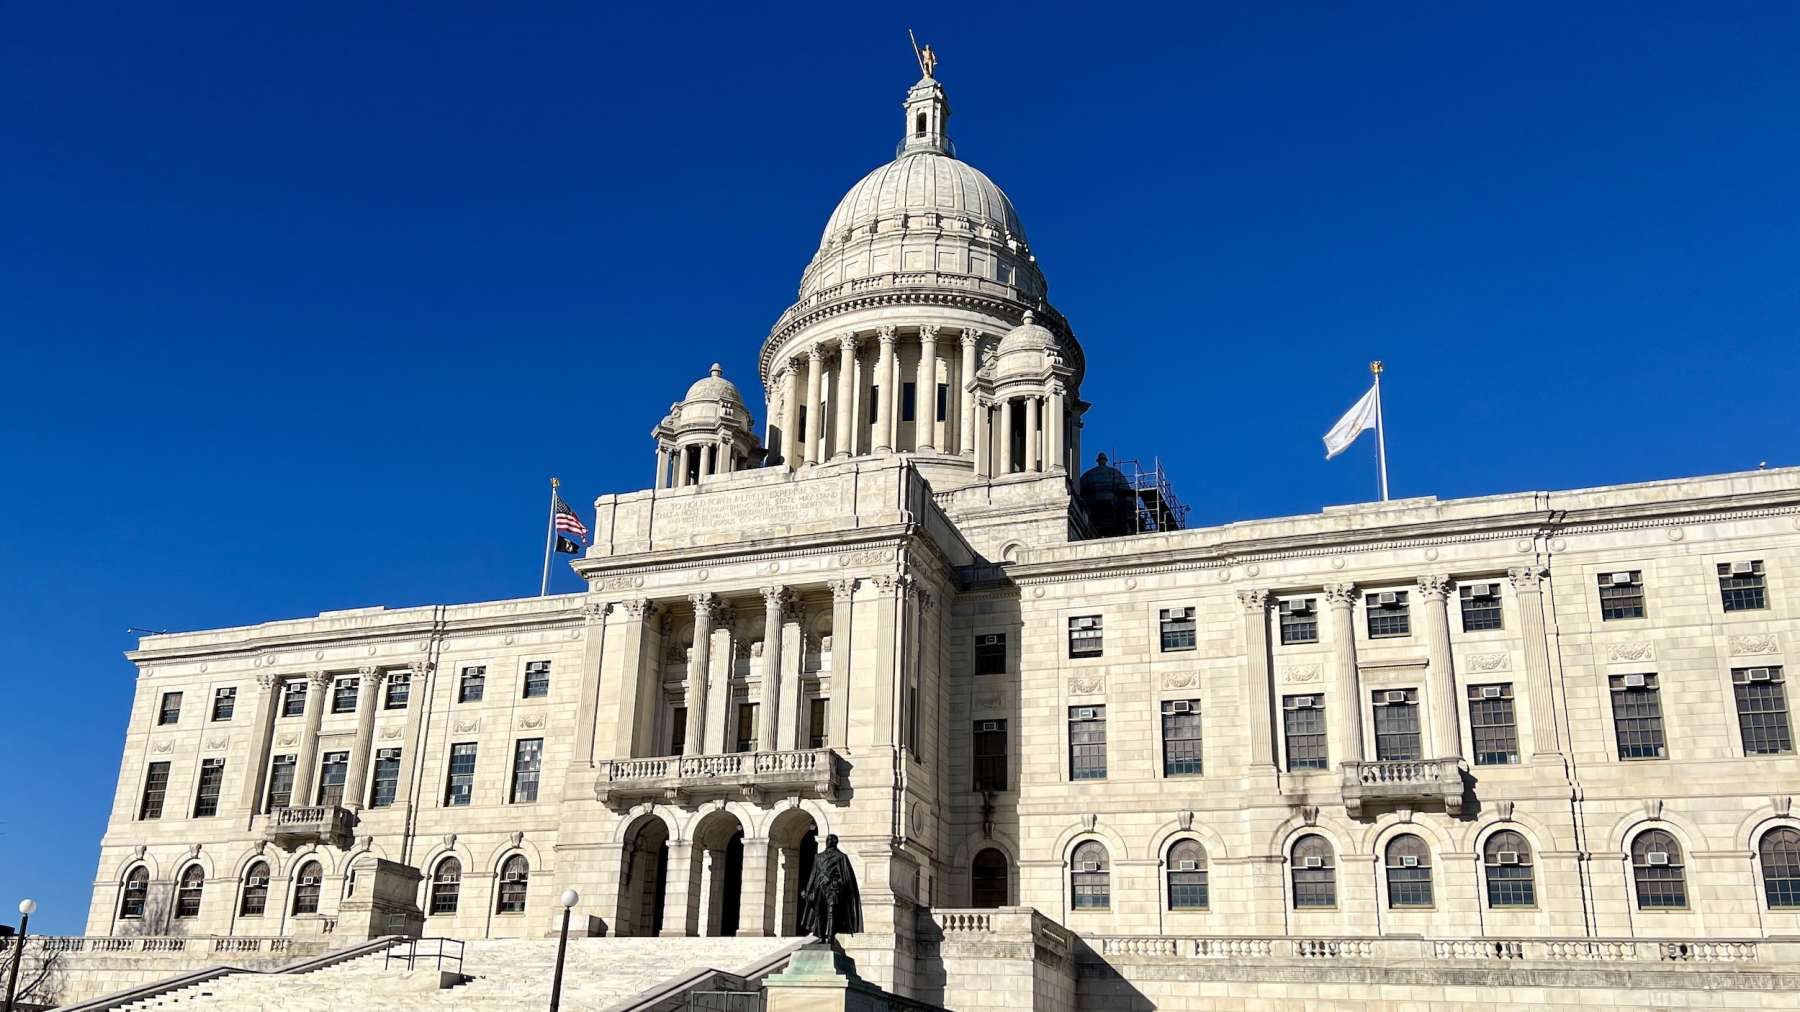 RI Rank: Rhode Island’s top legislators are both independent and accountable